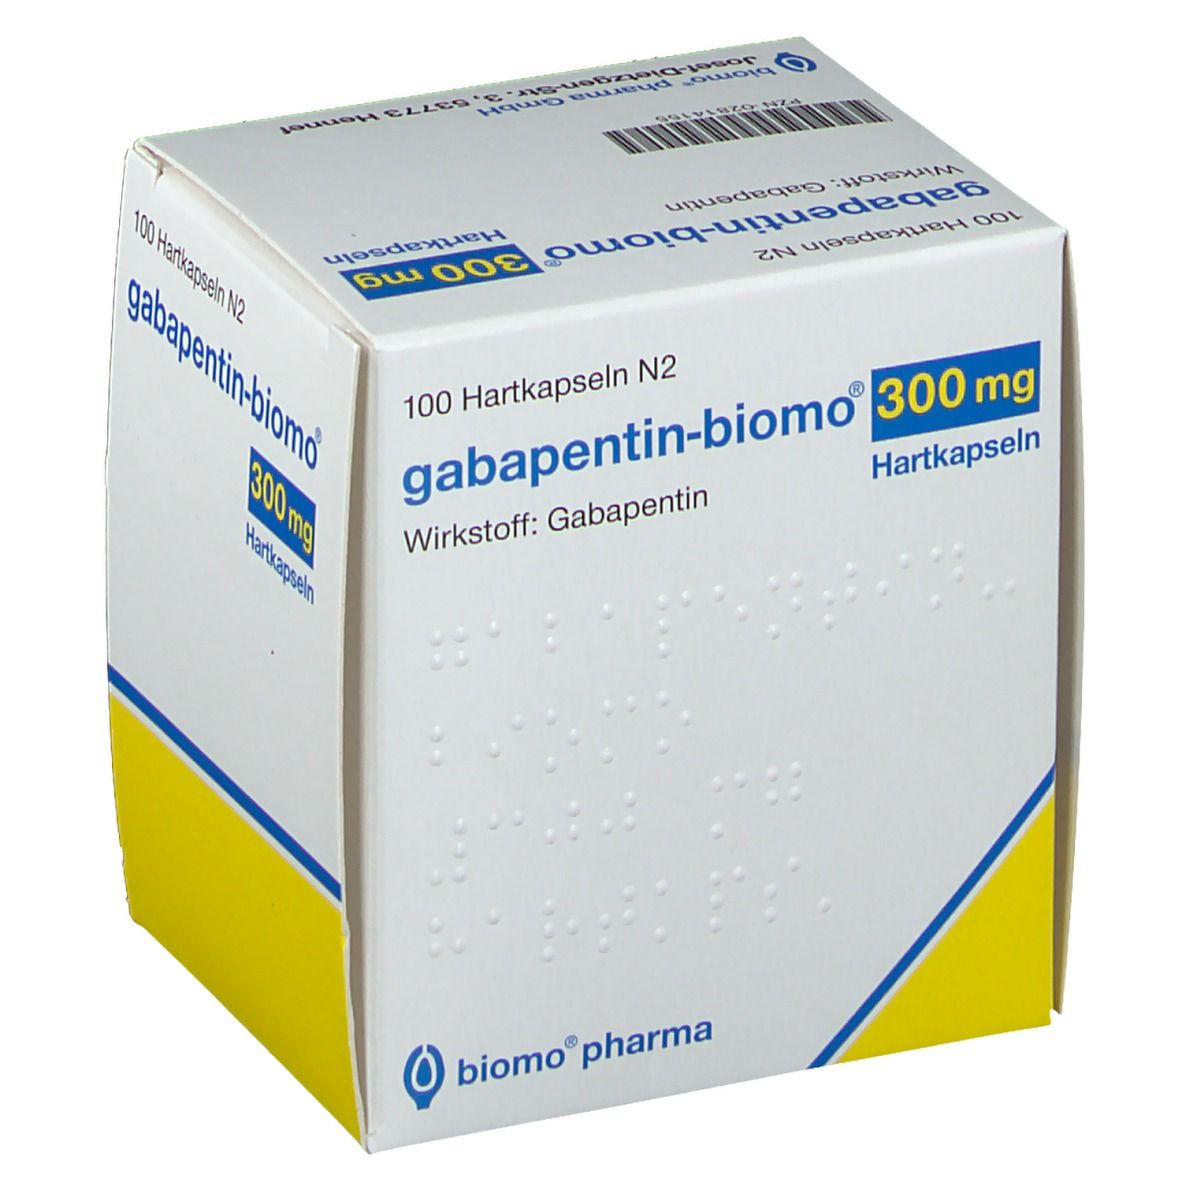 gabapentin-biomo® 300 mg